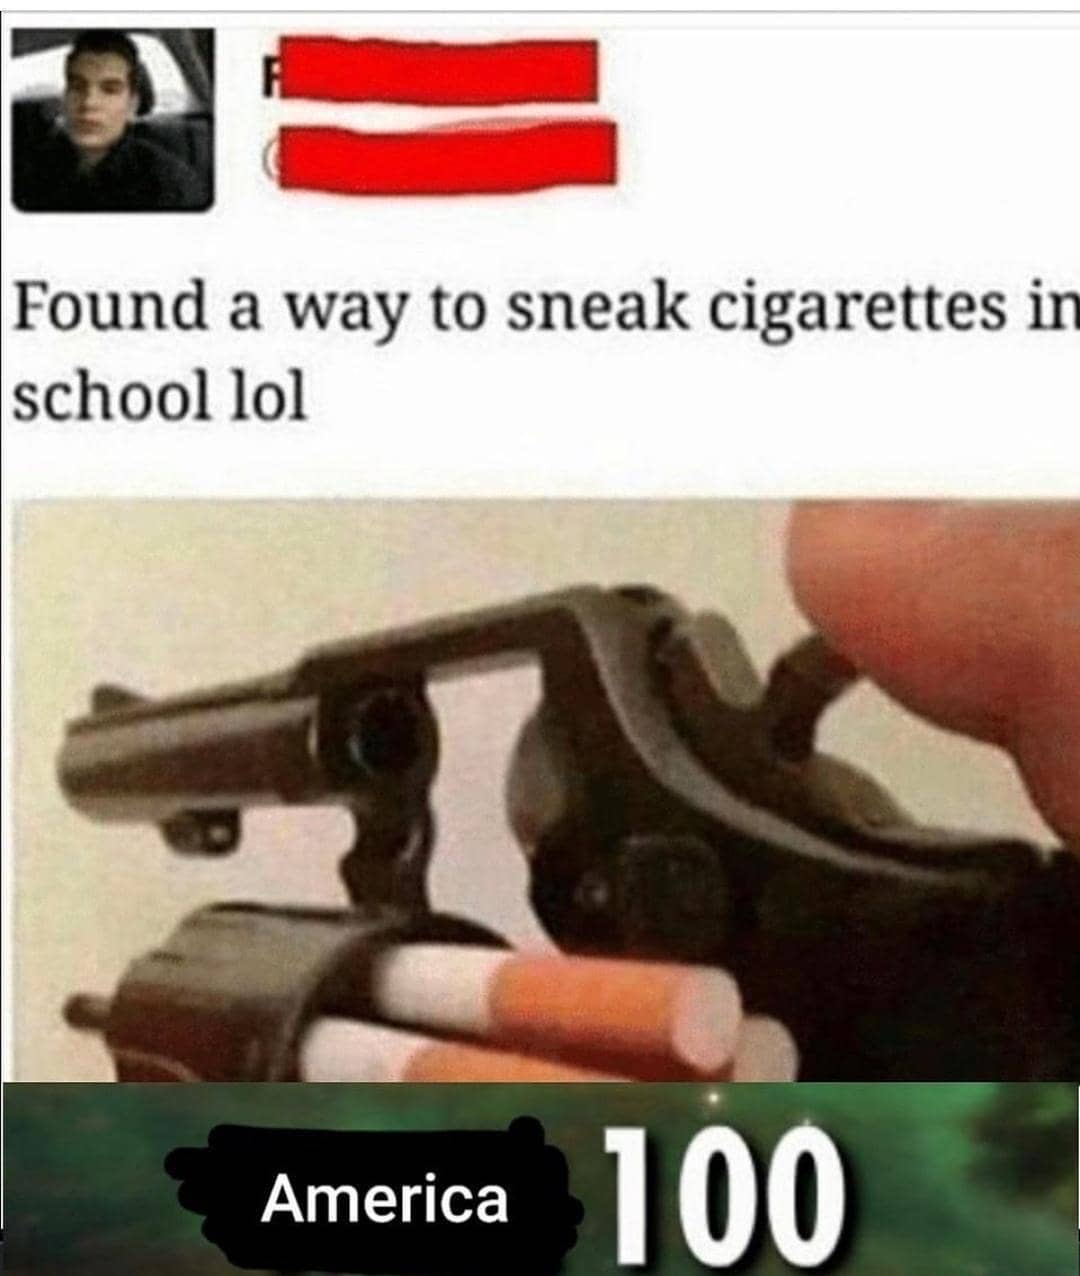 found a way to sneak cigarettes into school - Found a way to sneak cigarettes in school lol America 100